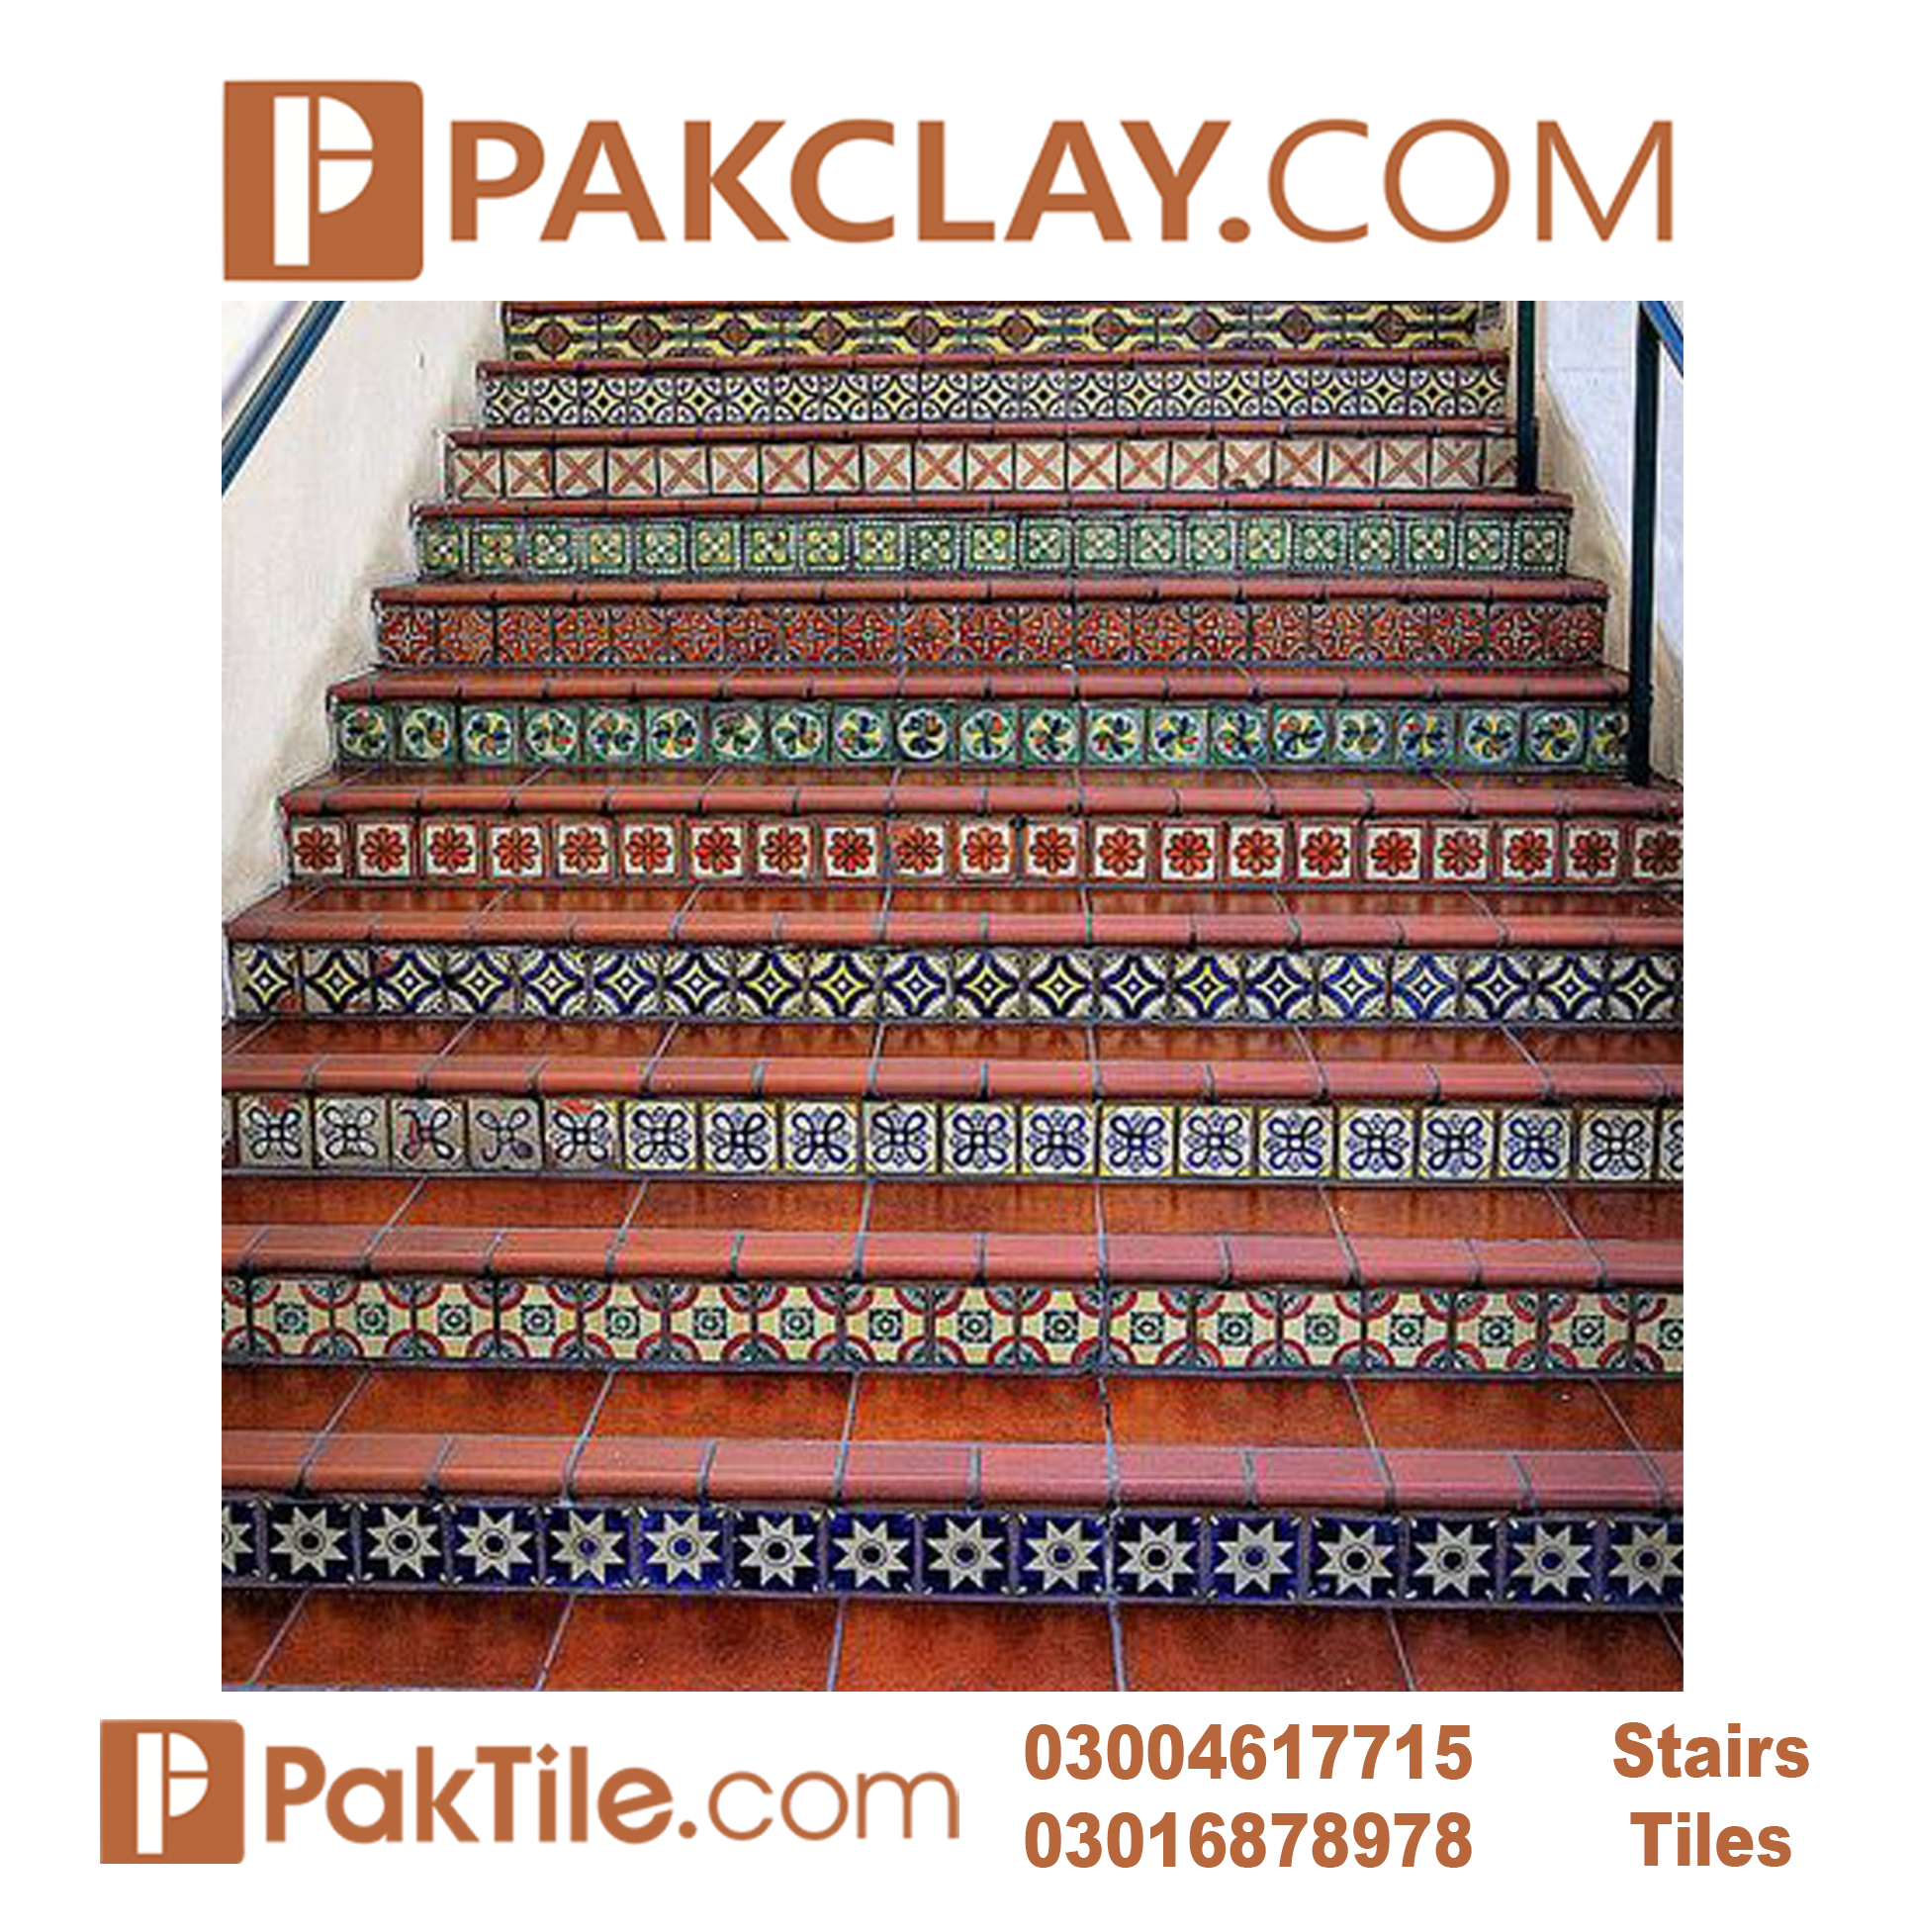 4 Stair Tiles Price in Karachi.